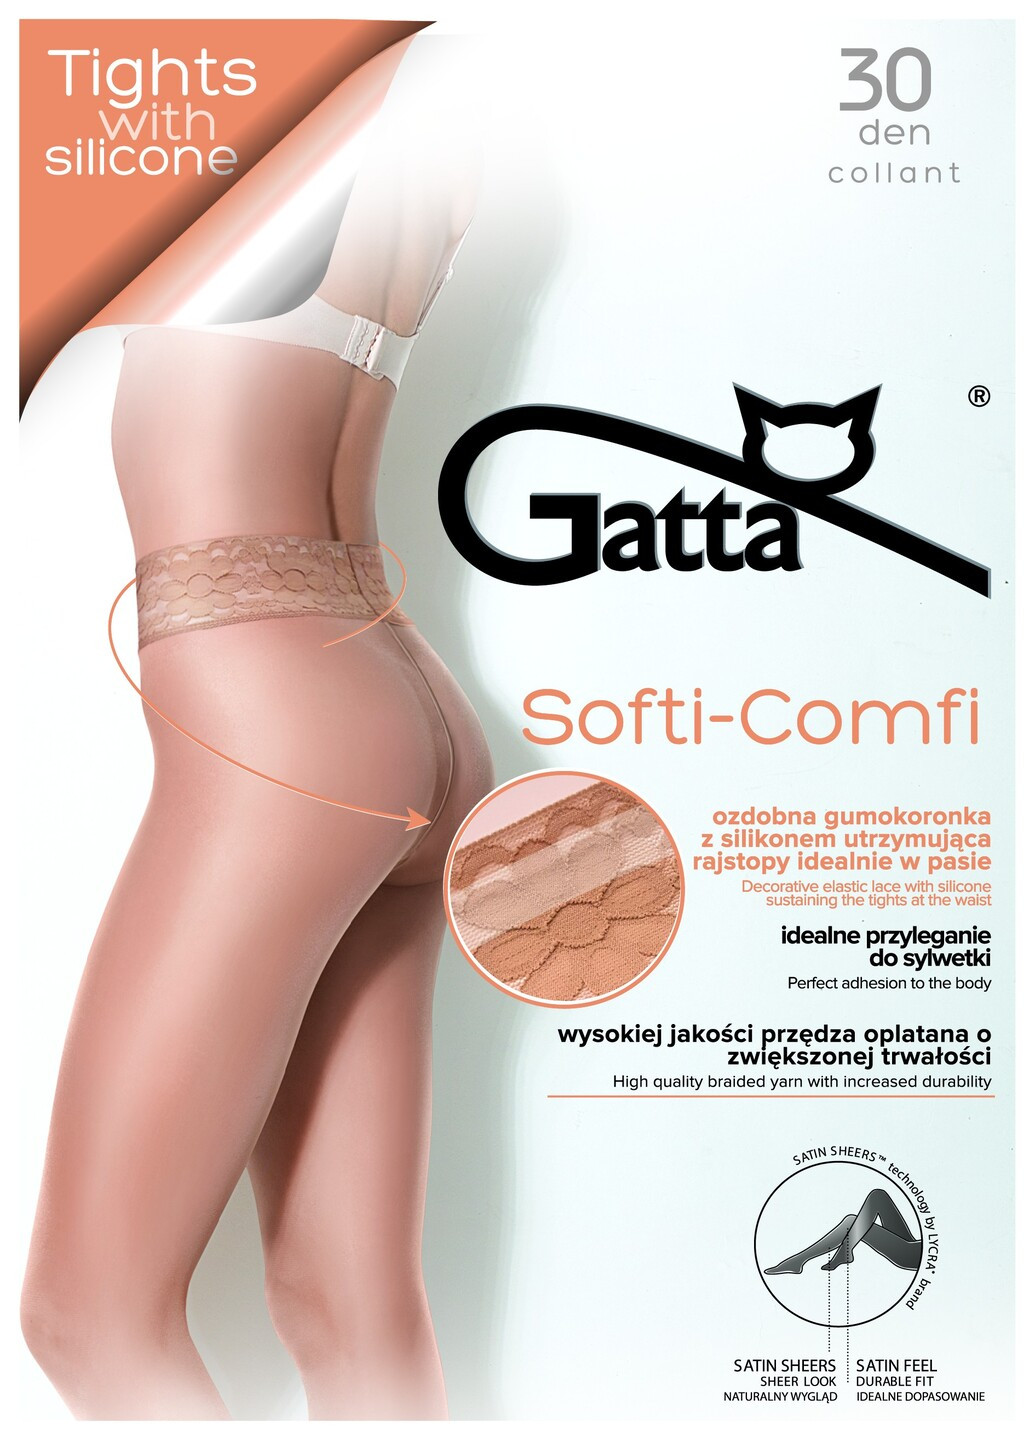 Колготки Gatta softi-comfi 30 (206020200)